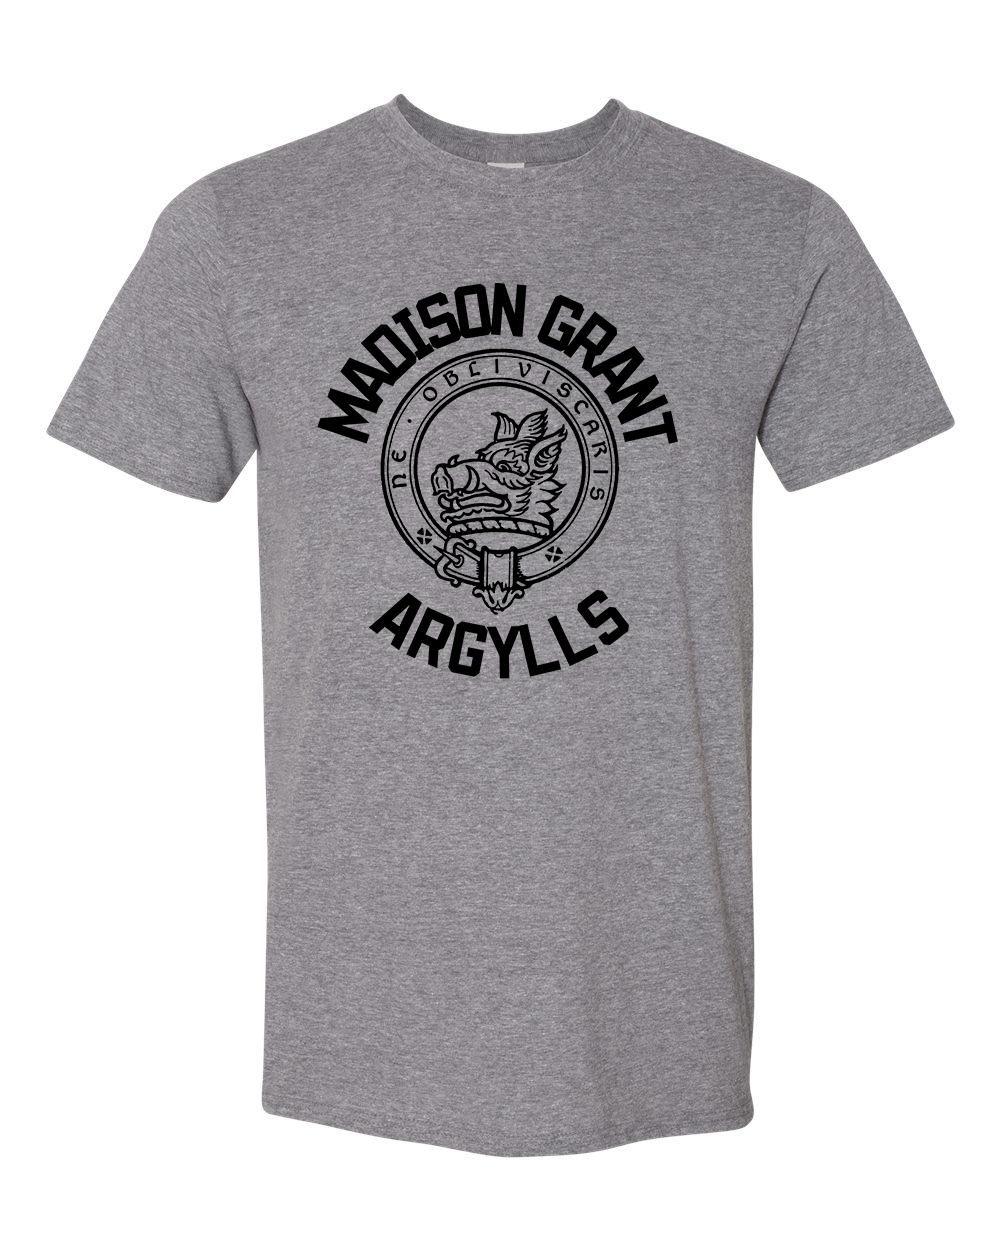 Vintage Inspired Madison Grant Argylls Tshirt